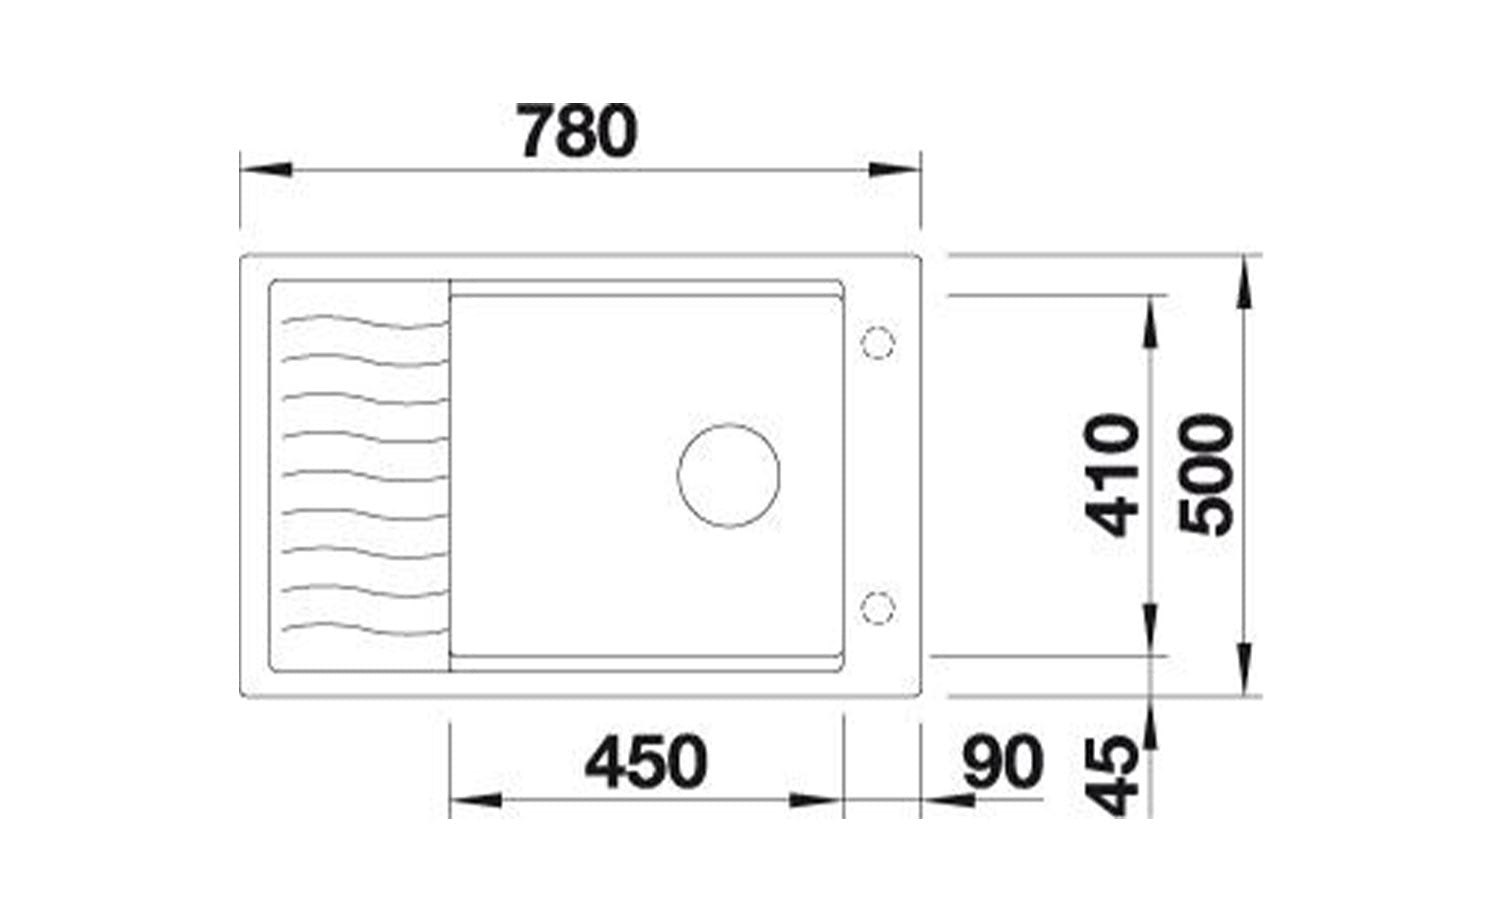 Blanco sudoper Elon XL 6S 78 cm alumetalik + sifon 3,5” reverzibilni